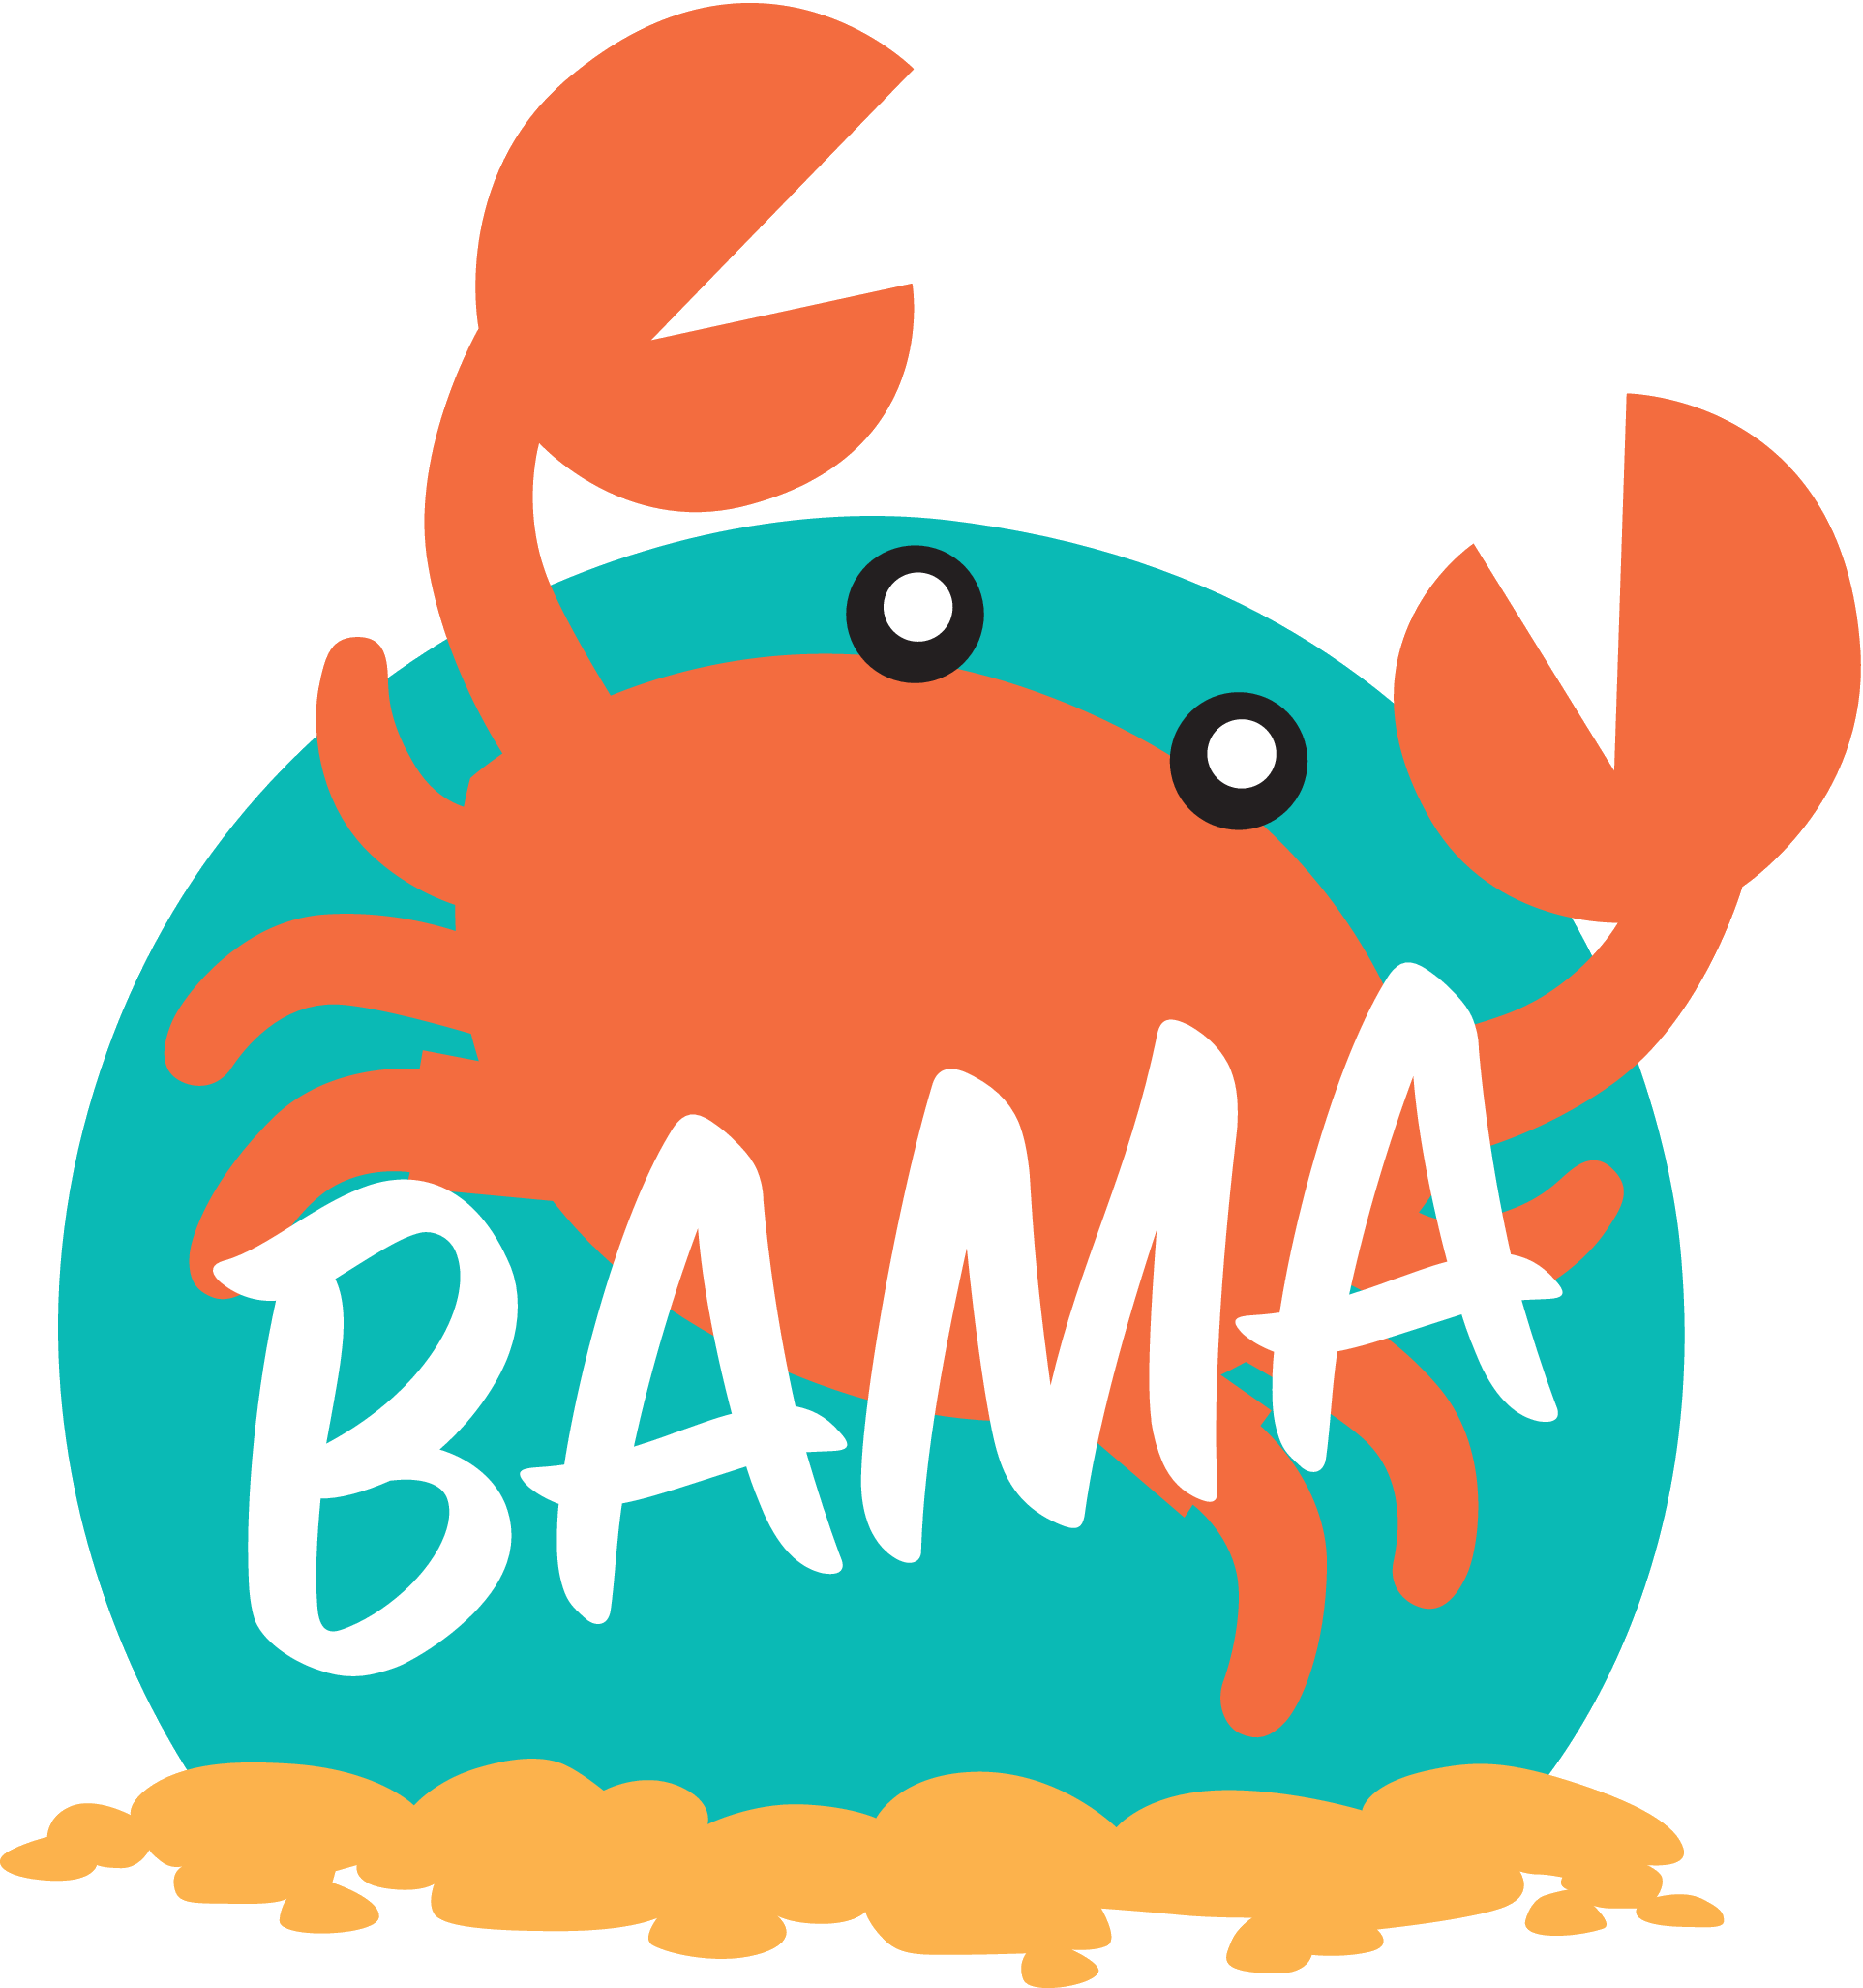 BAMA Individual Membership